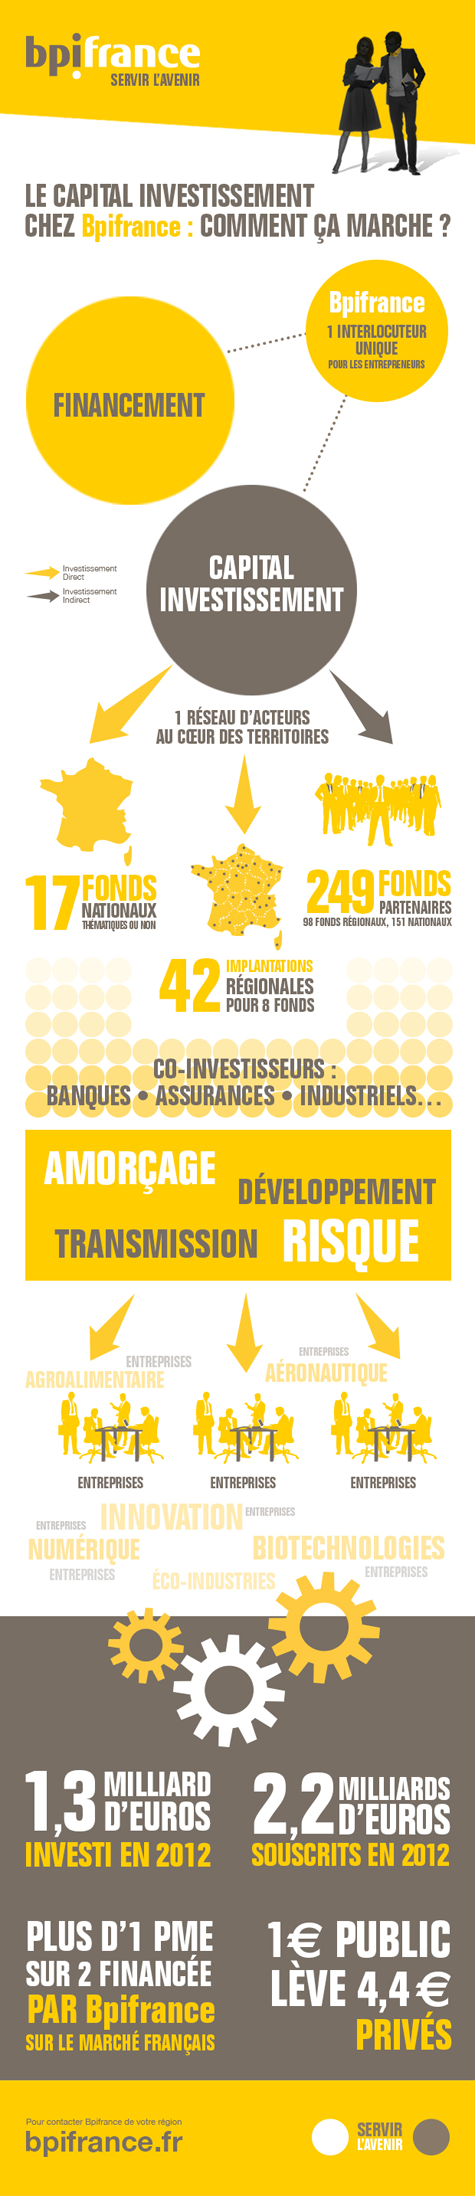 infographie_bpifrance_investissement